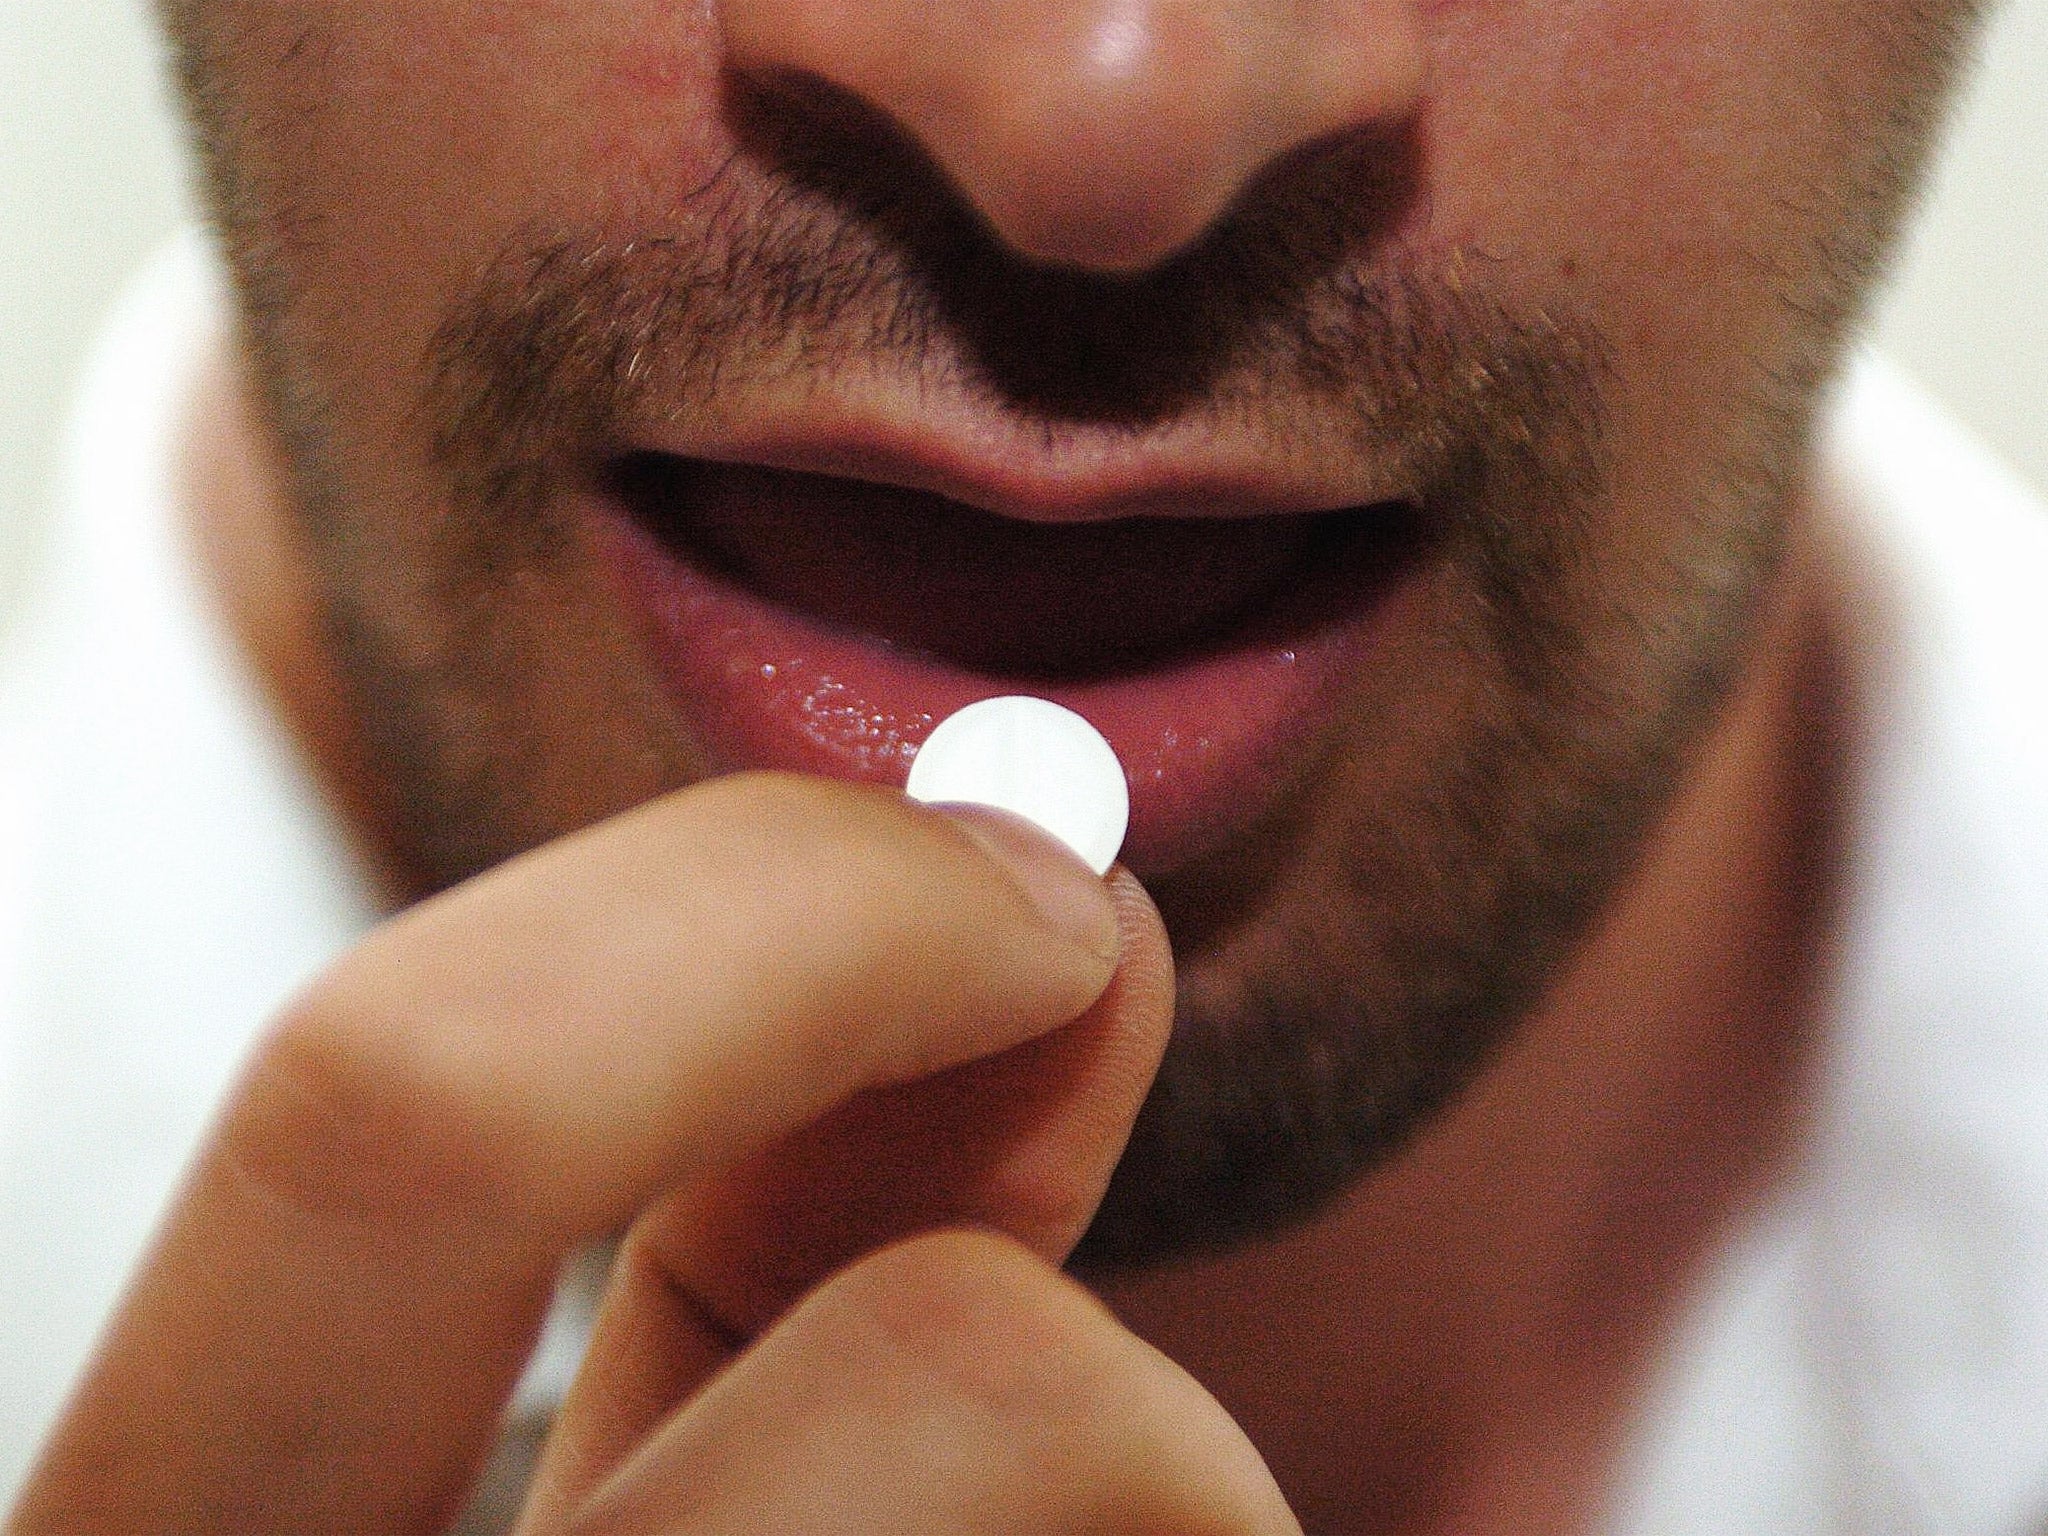 A man taking an Aspirin tablet